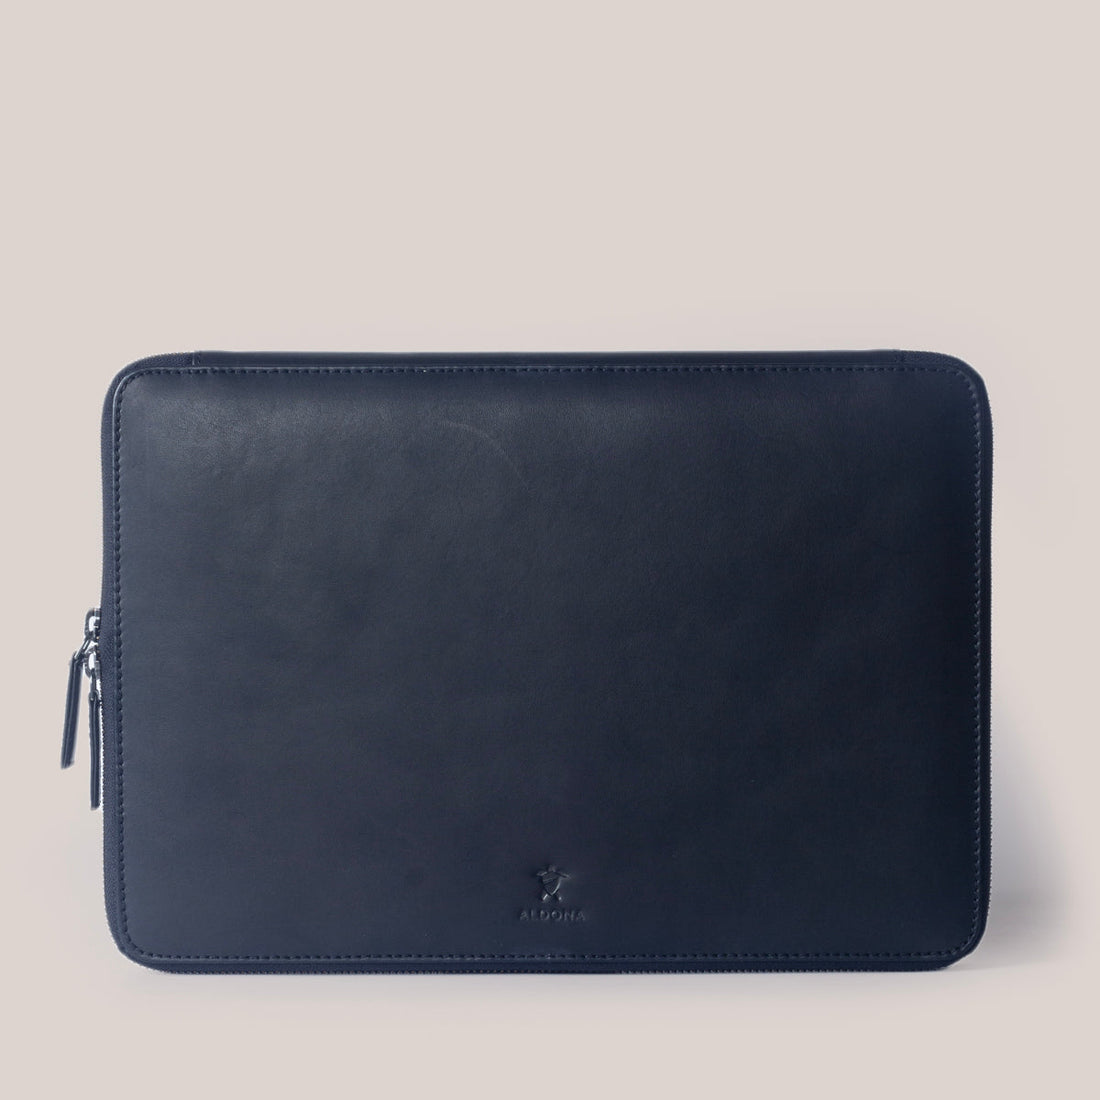 DELL XPS 13 Plus Zippered Laptop Case - Felt and Tan Crunch